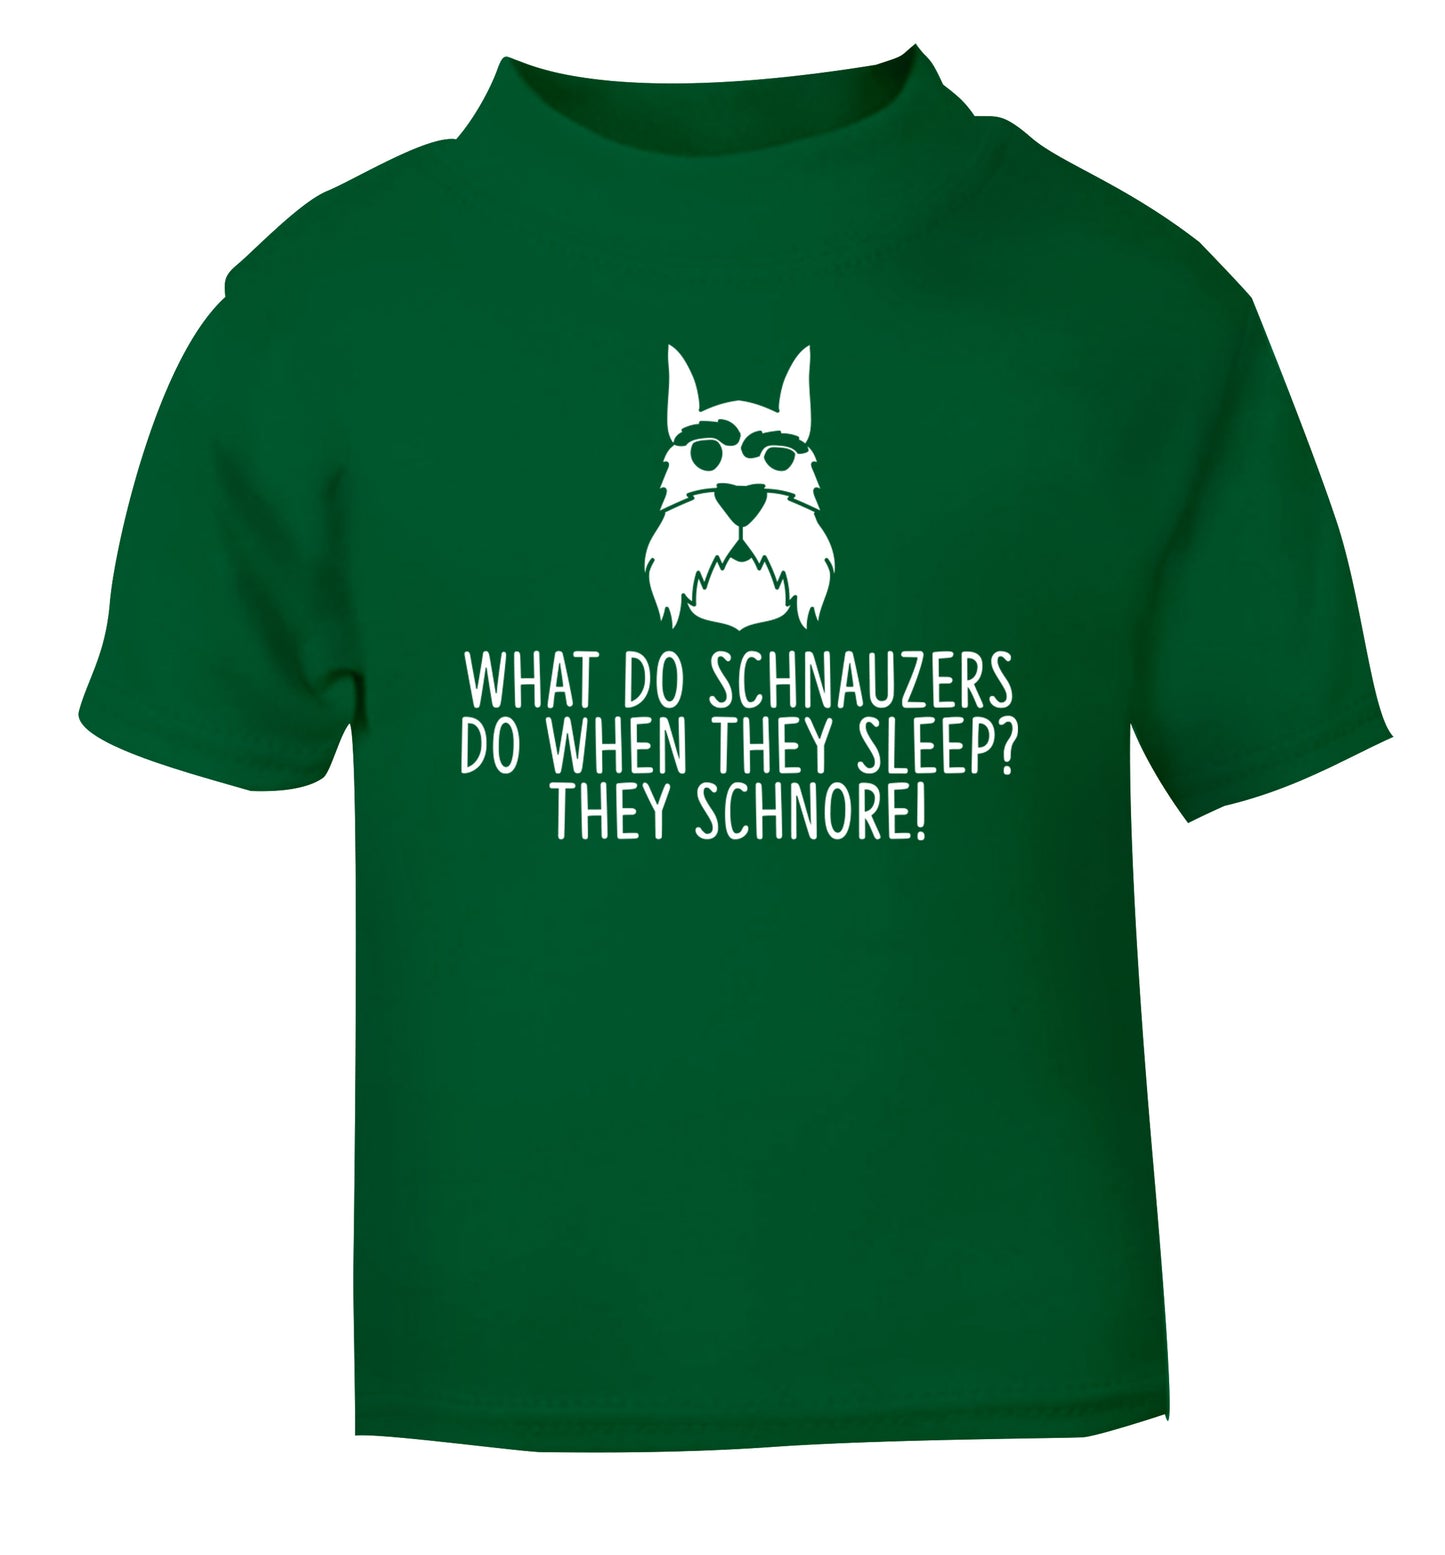 What do schnauzers do when they sleep? Schnore! green Baby Toddler Tshirt 2 Years